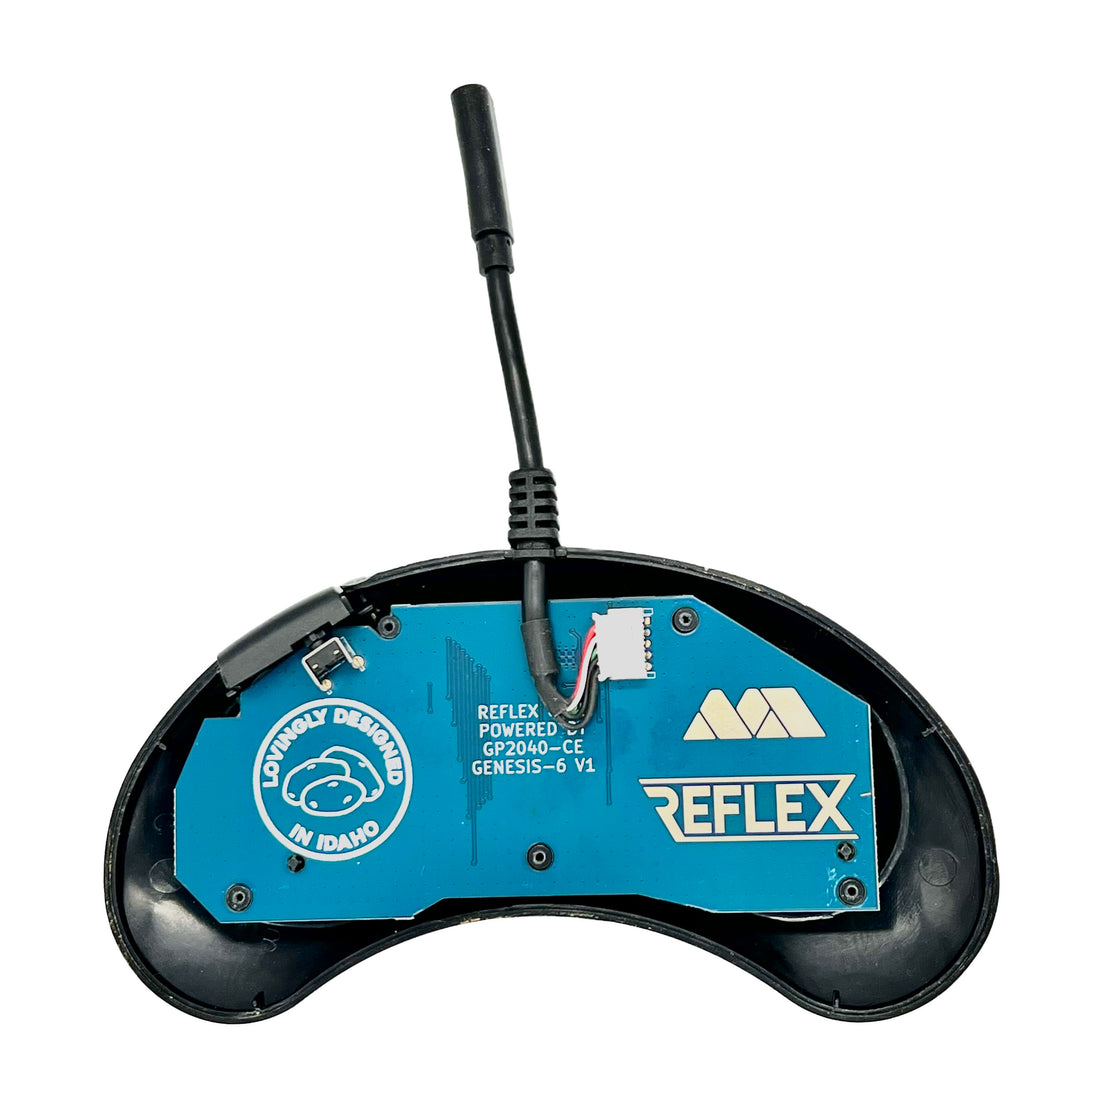 Reflex CTRL Original Controller USB Conversion Kits